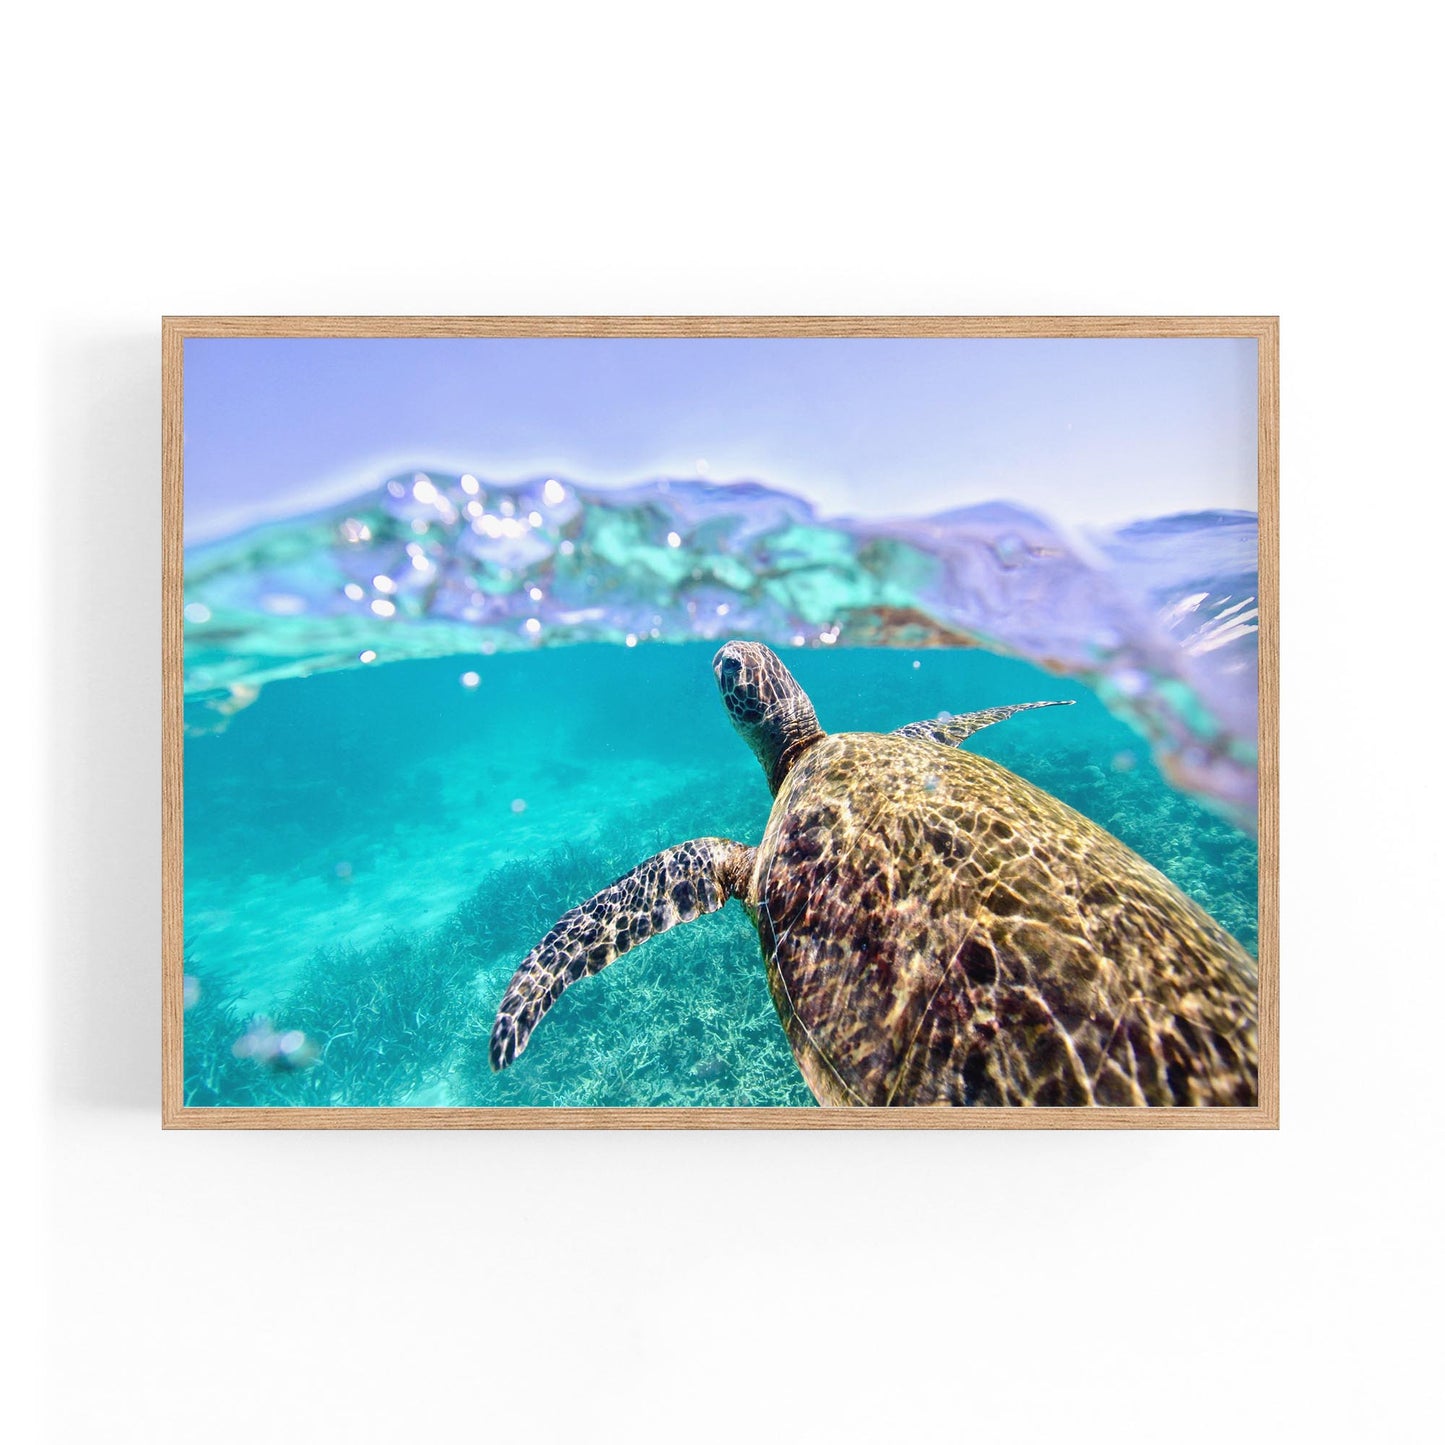 Green Sea Turtle, Ningaloo Reef Photograph Art - The Affordable Art Company